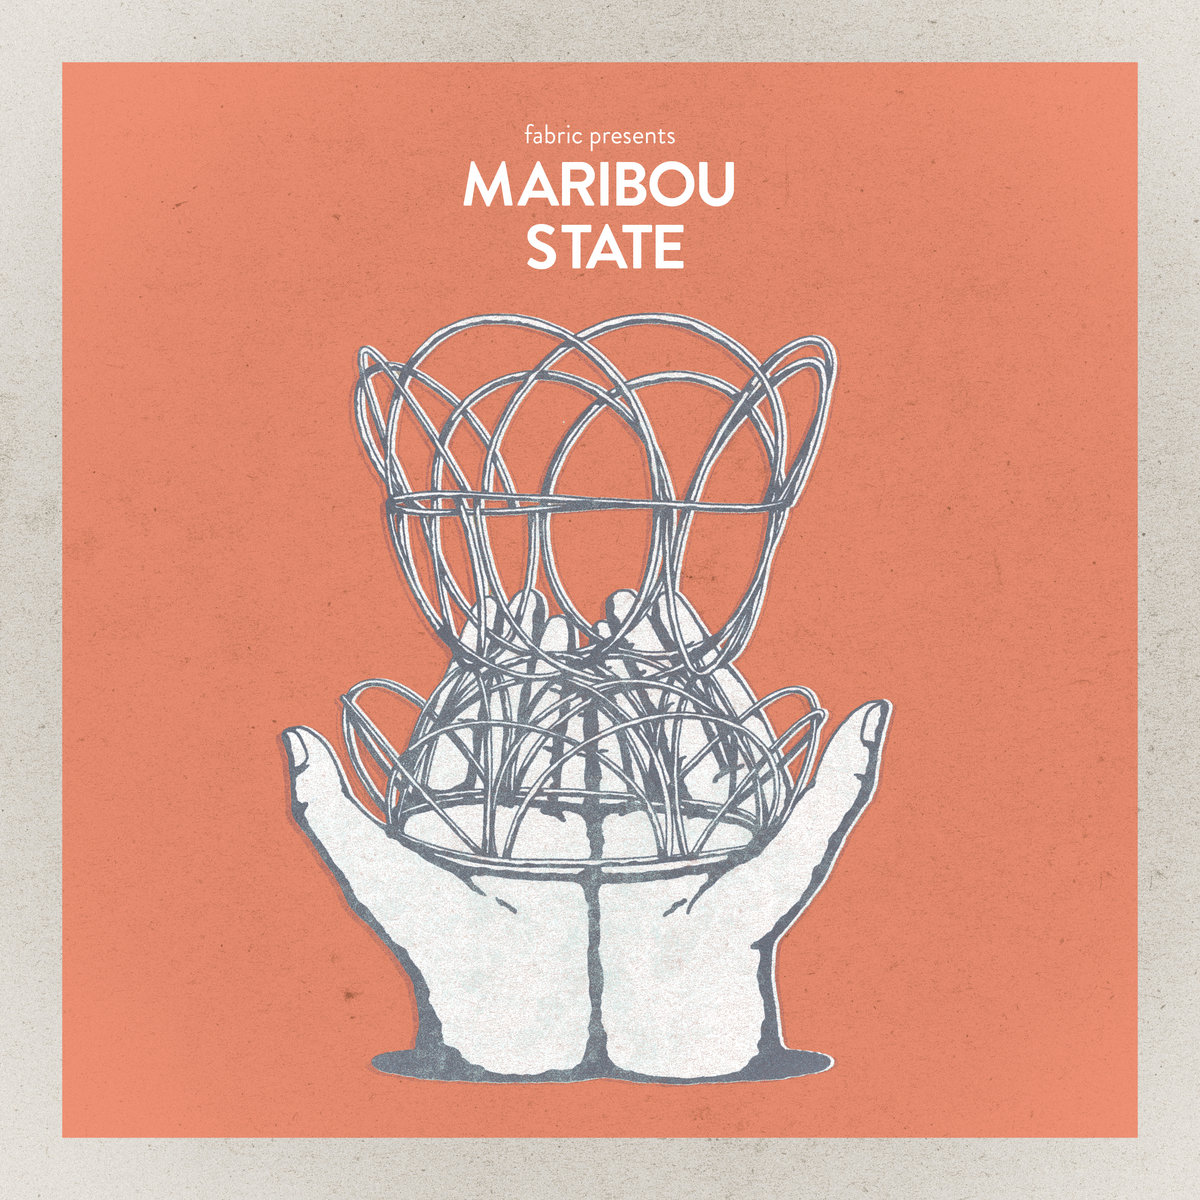 VA – Fabric presents Maribou State